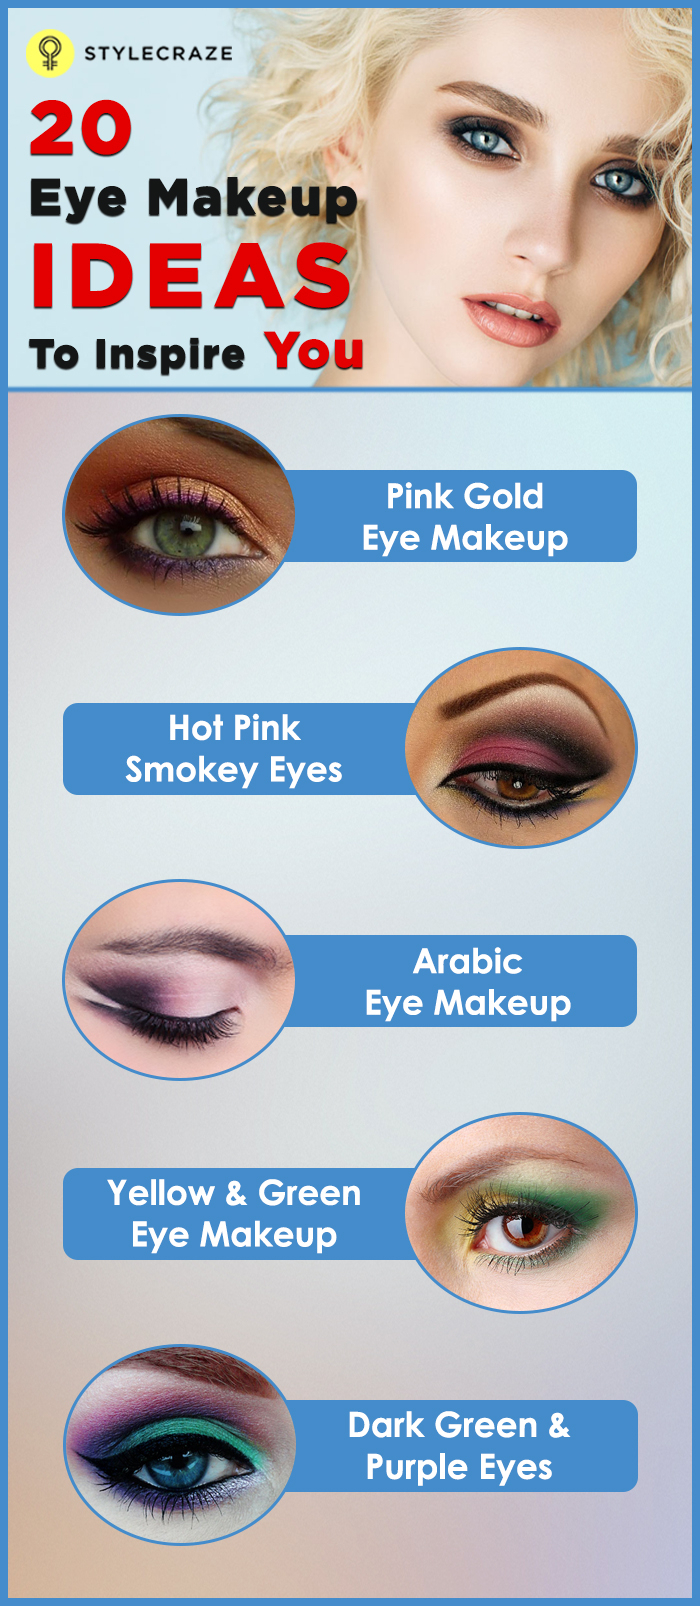 Arab Women Eye Makeup Top 20 Beautiful And Sexy Eye Makeup Looks To Inspire You